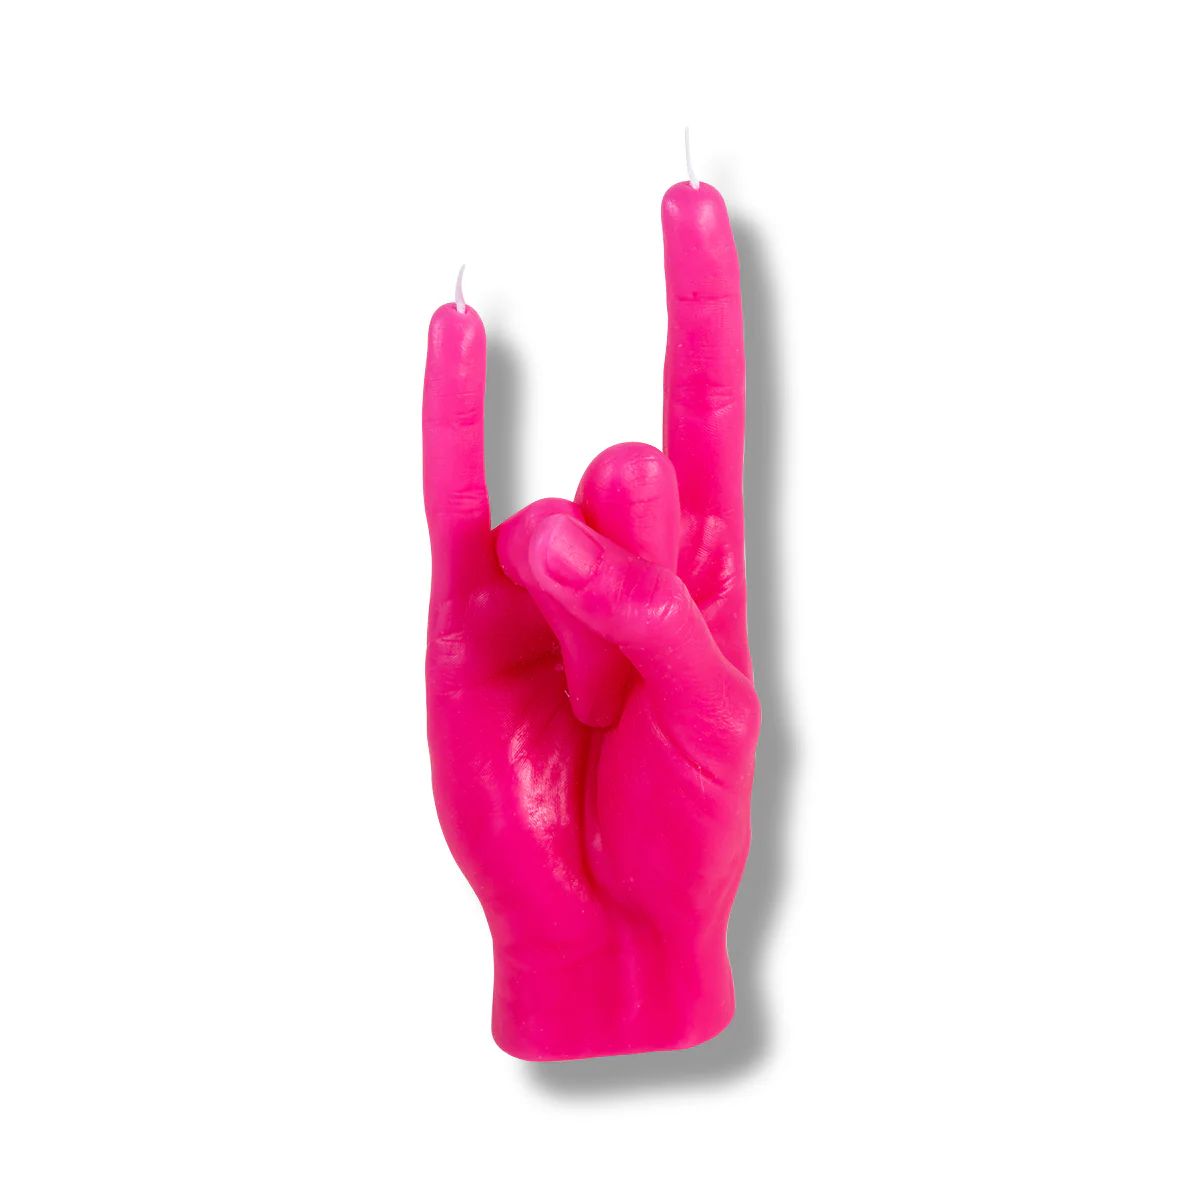 Furbish Studio - Rock On Candle - Pink | Furbish Studio